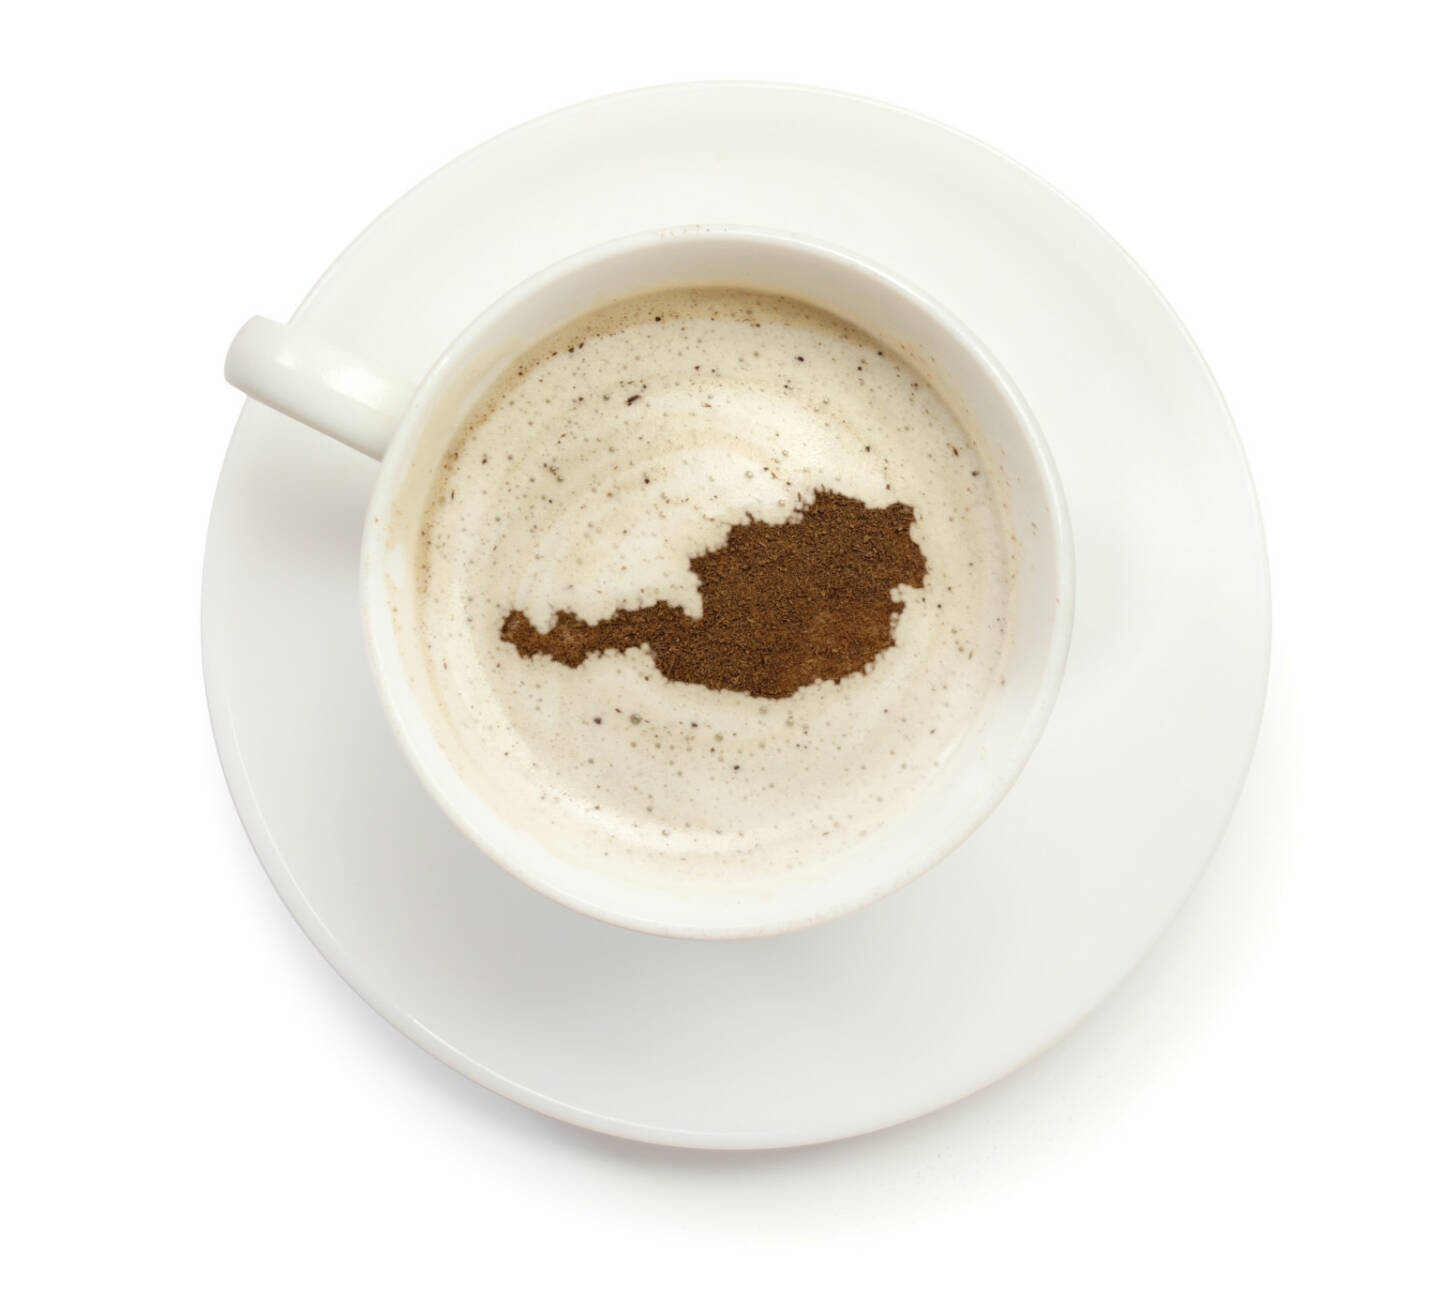 Kaffee, Tasse, Österreich, Umriss - http://www.shutterstock.com/de/pic-199970363/stock-photo-a-cup-of-coffee-with-foam-and-powder-in-the-shape-of-austria-series.html (Bild: shutterstock.com)